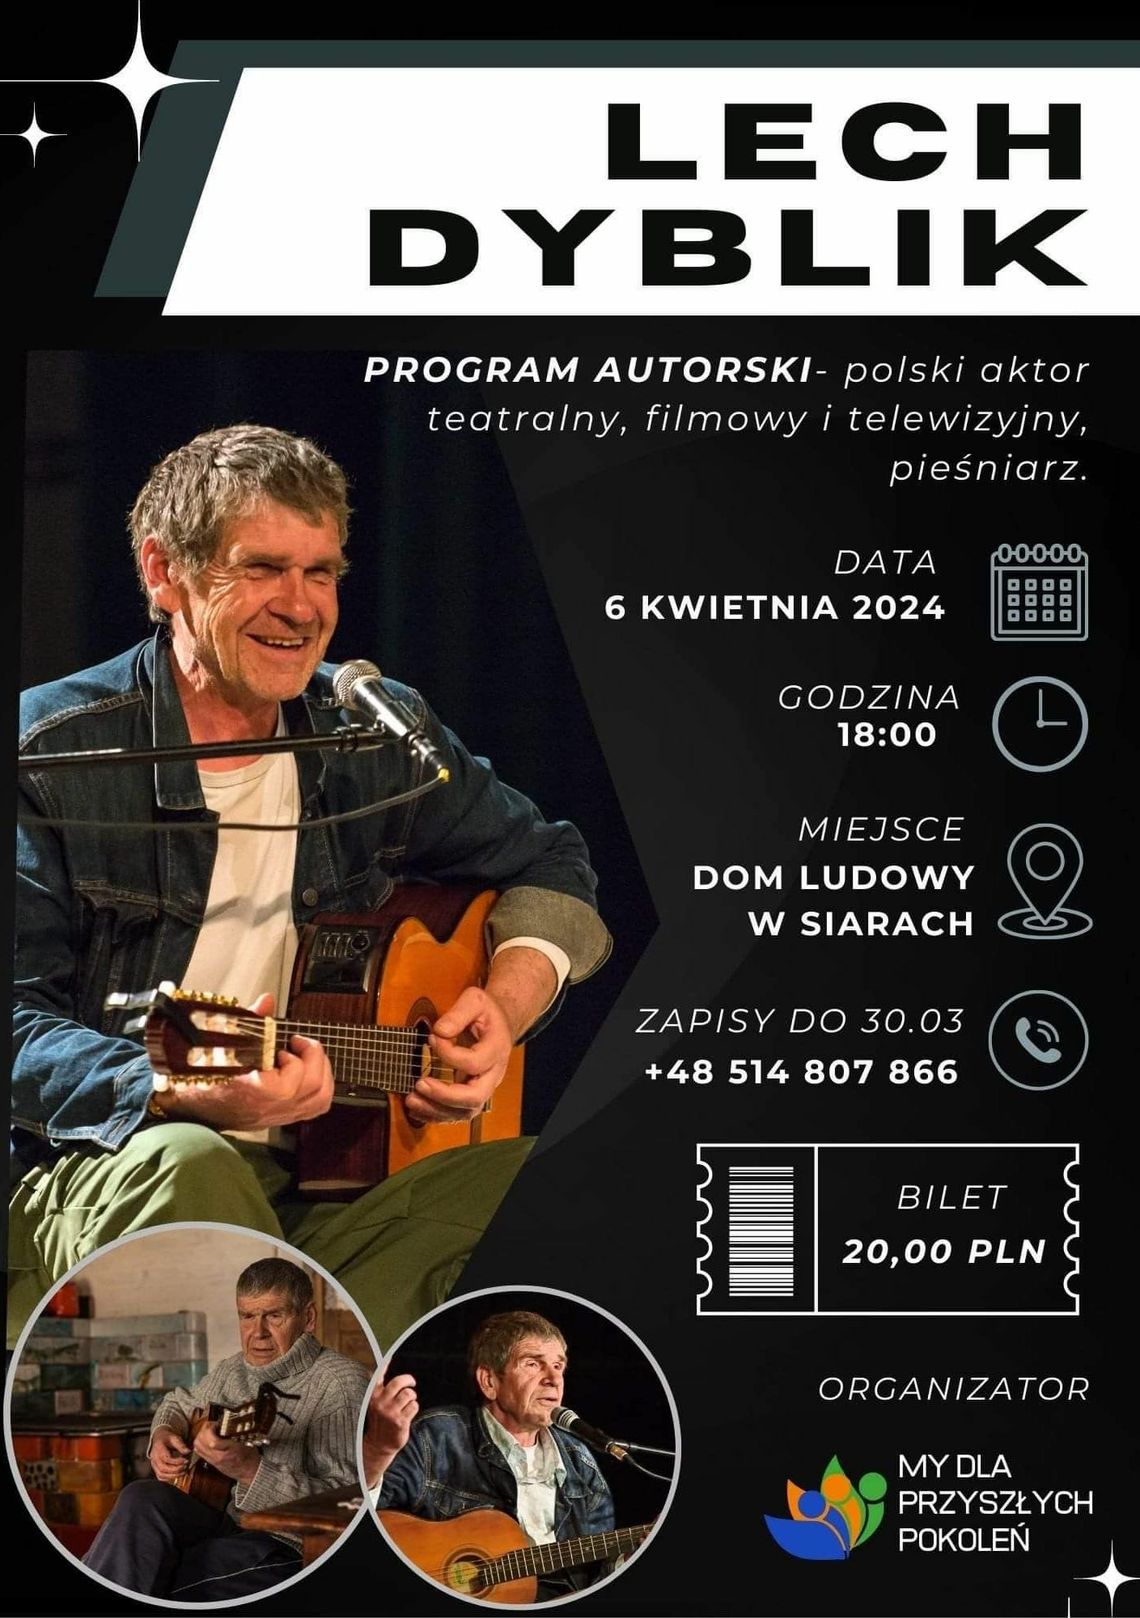 Lech Dyblik – program autorski | halogorlice.info